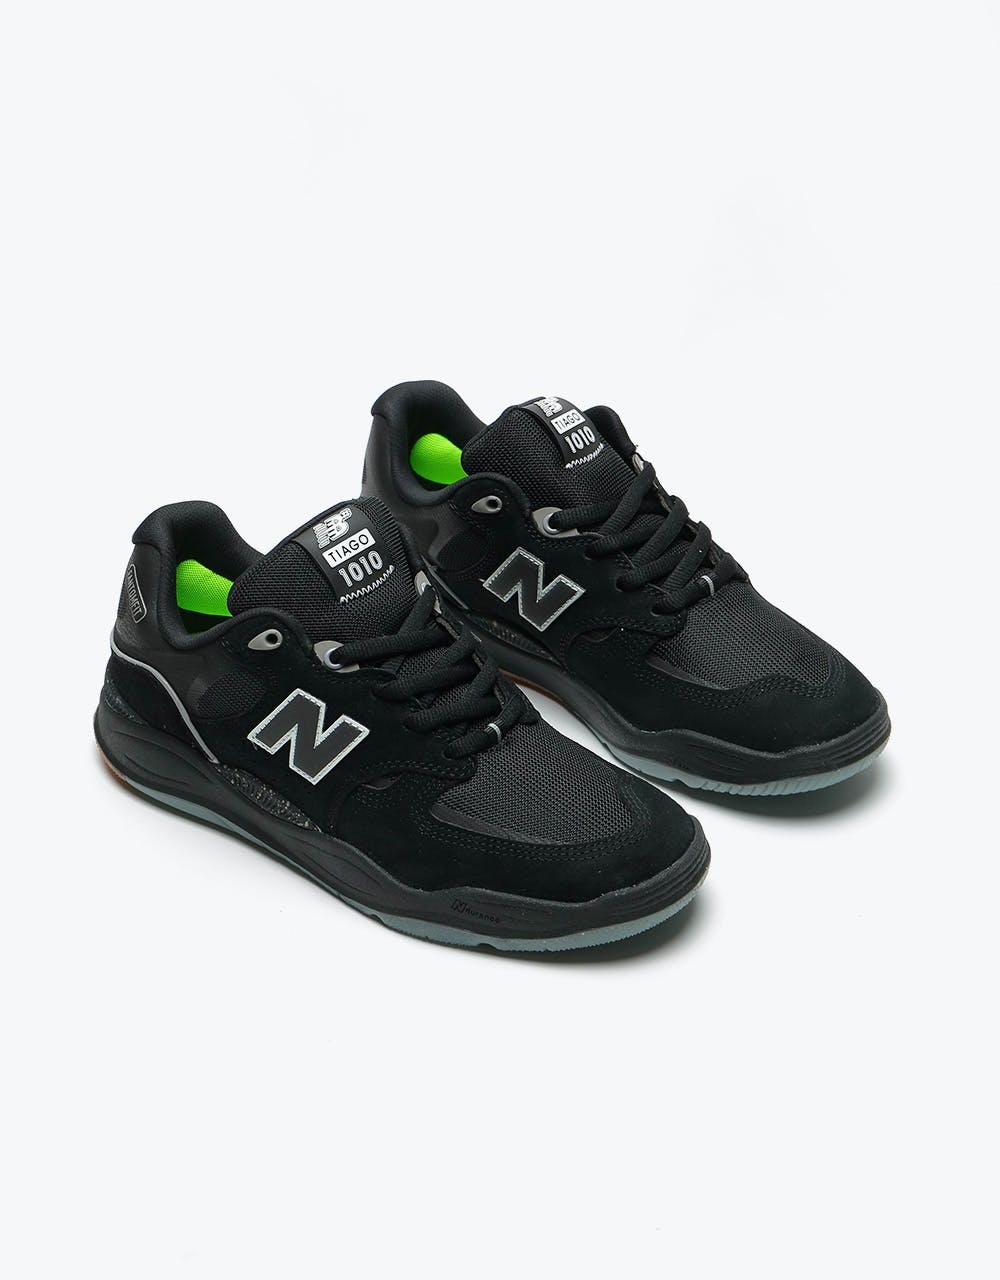 New Balance Numeric 1010 Skate Shoes - Black/Black